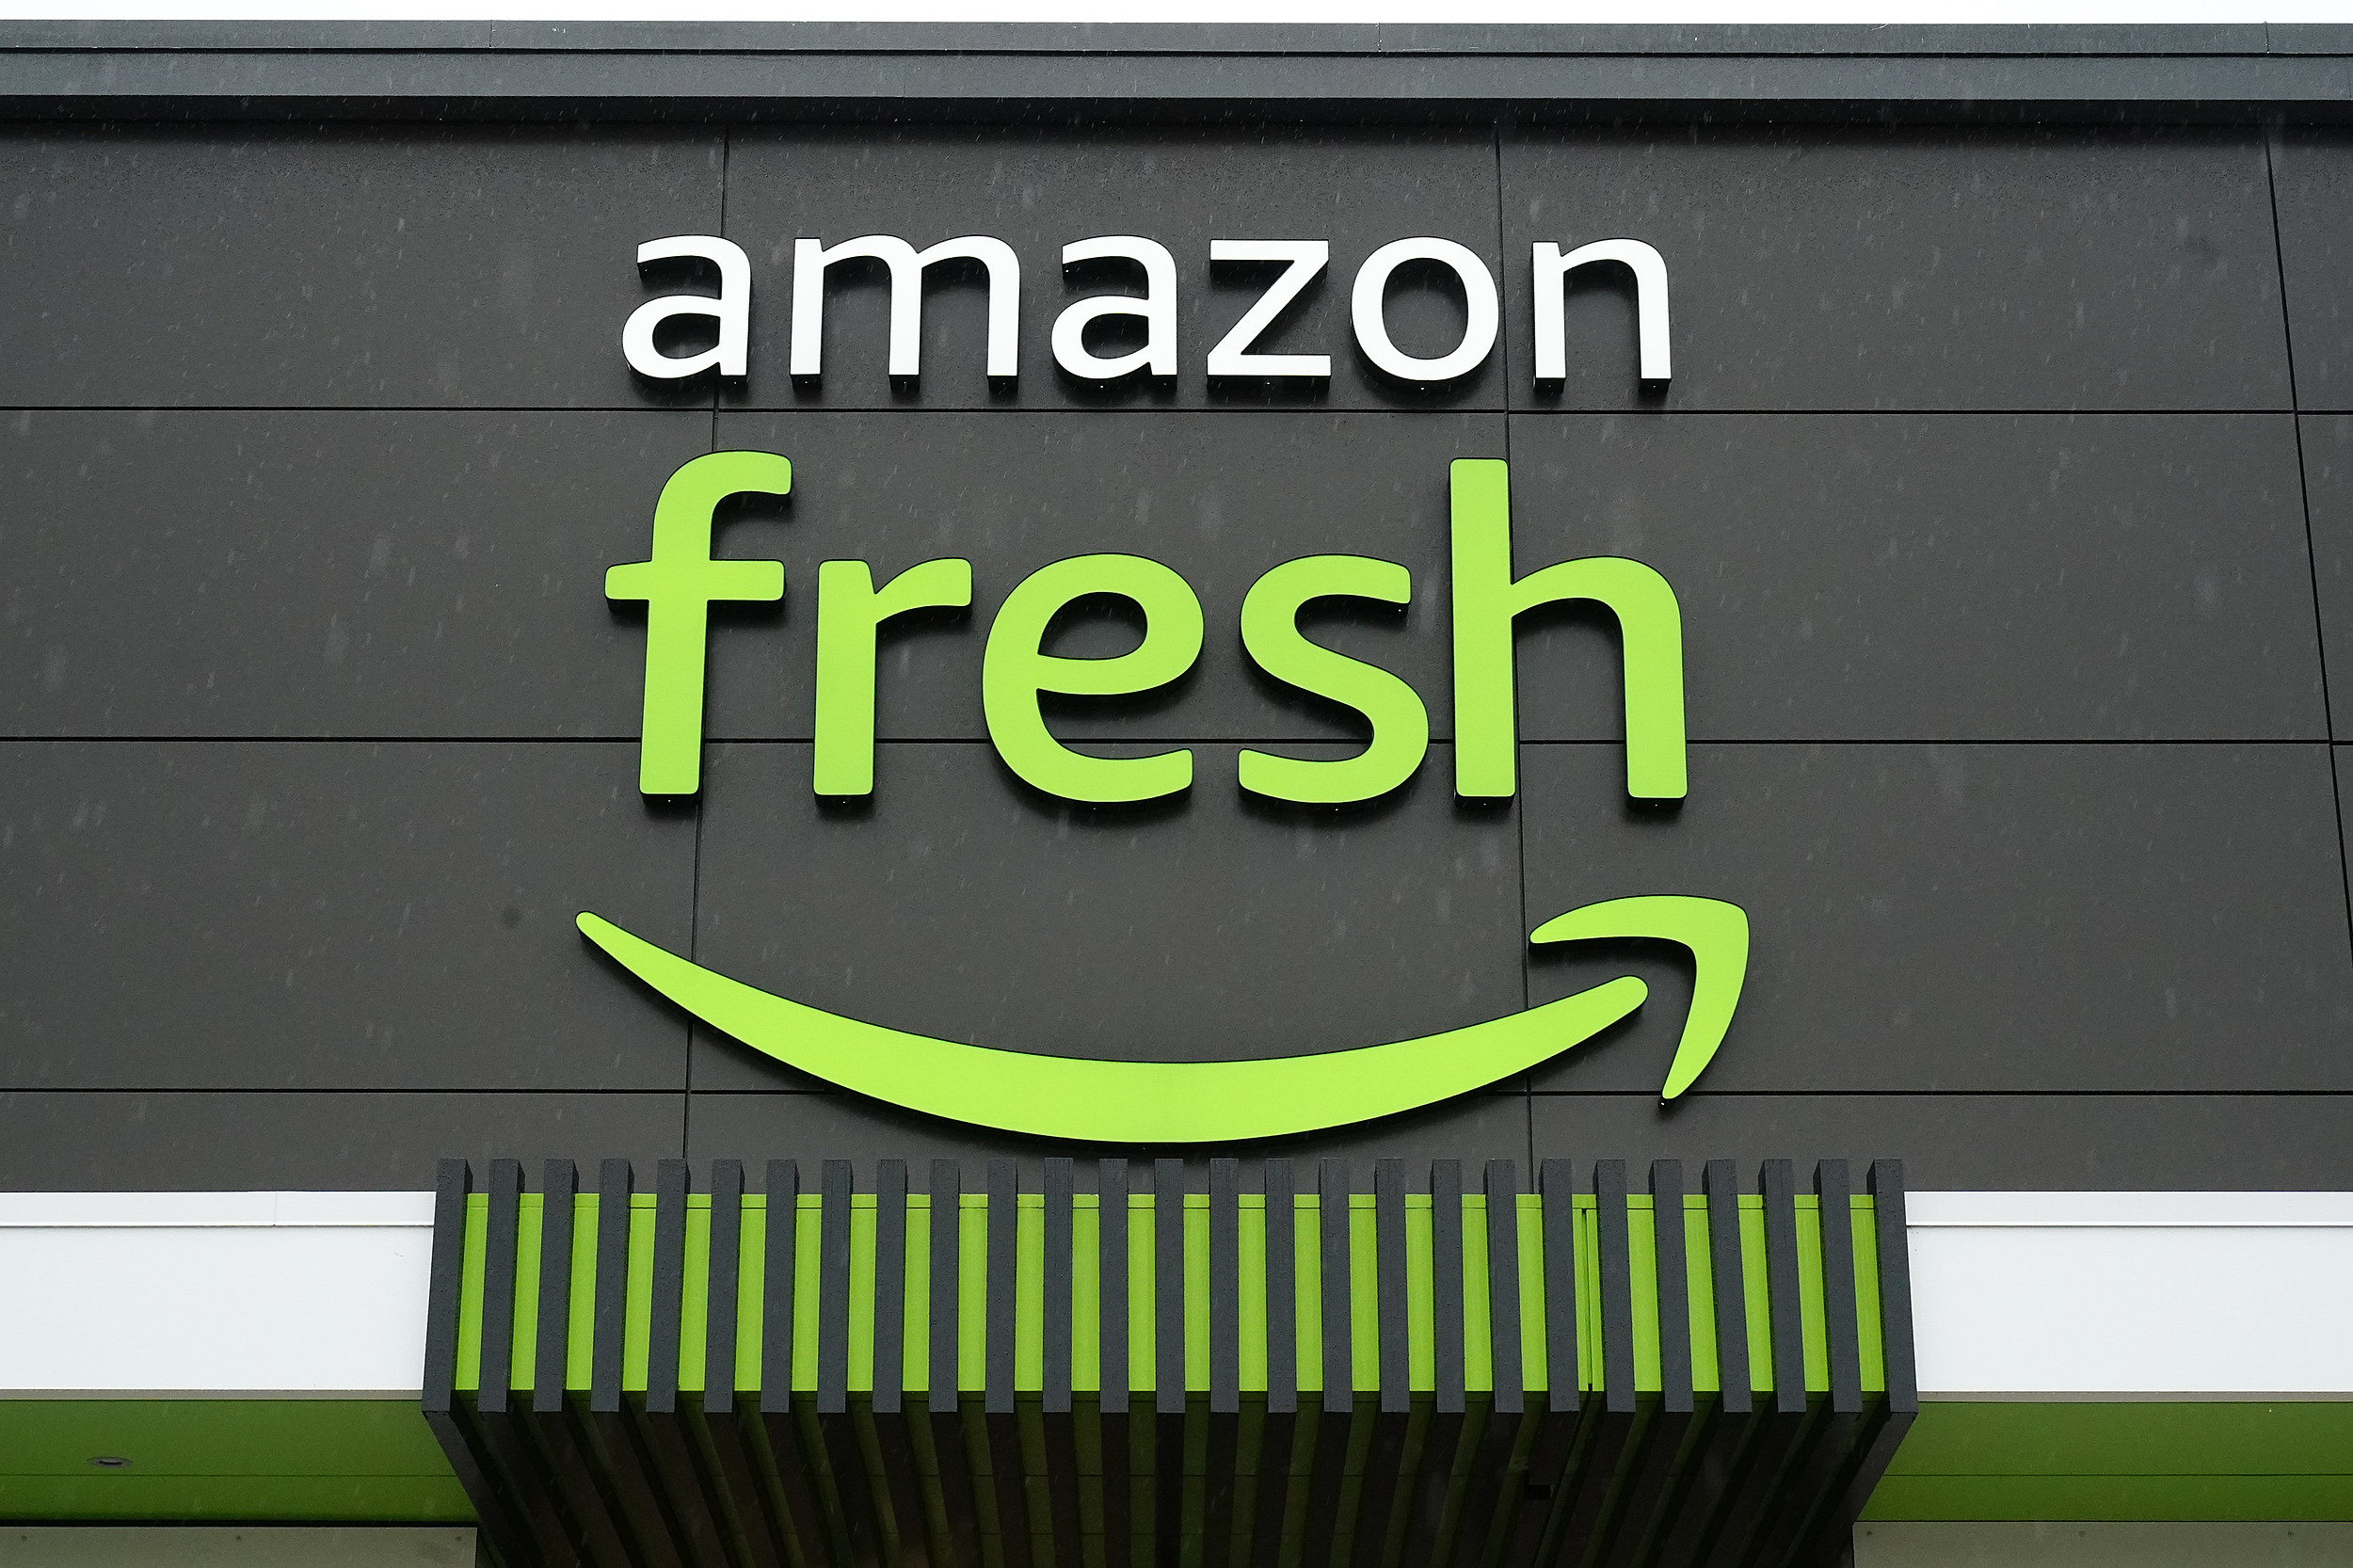 Morristown, NJ residents giddy over Amazon Fresh opening